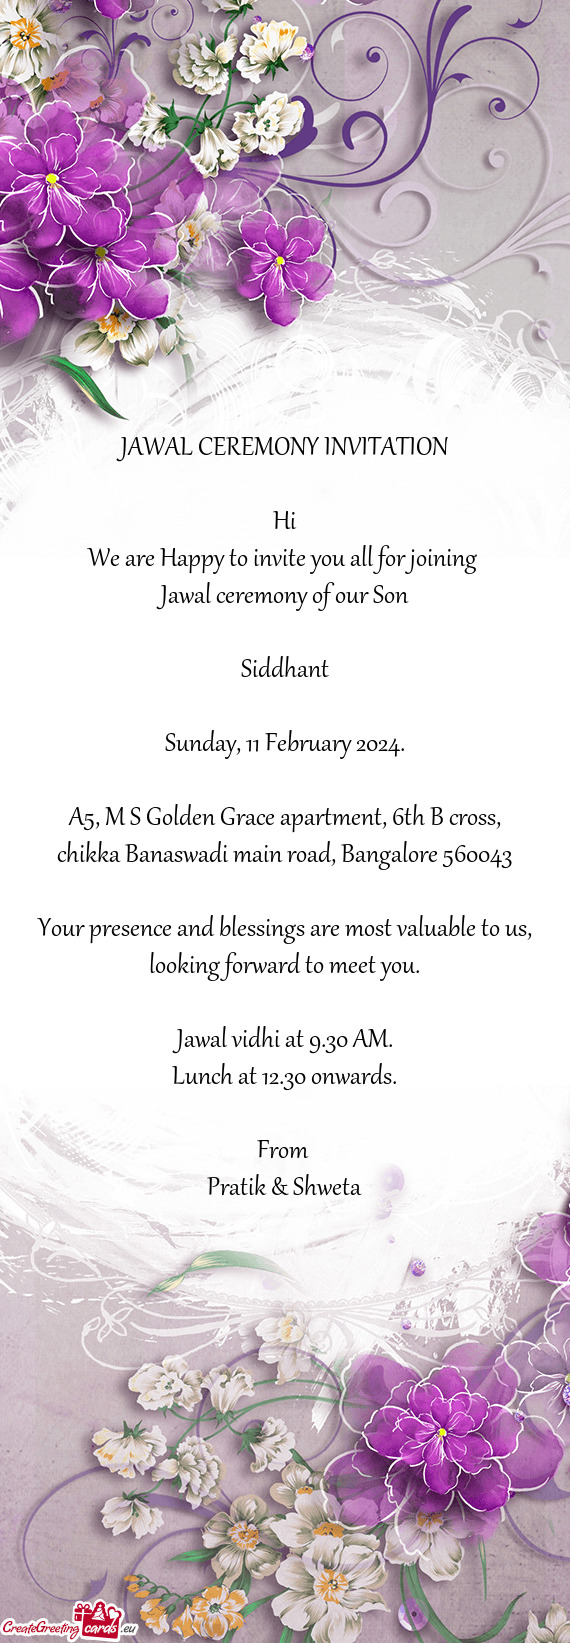 A5, M S Golden Grace apartment, 6th B cross, chikka Banaswadi main road, Bangalore 560043